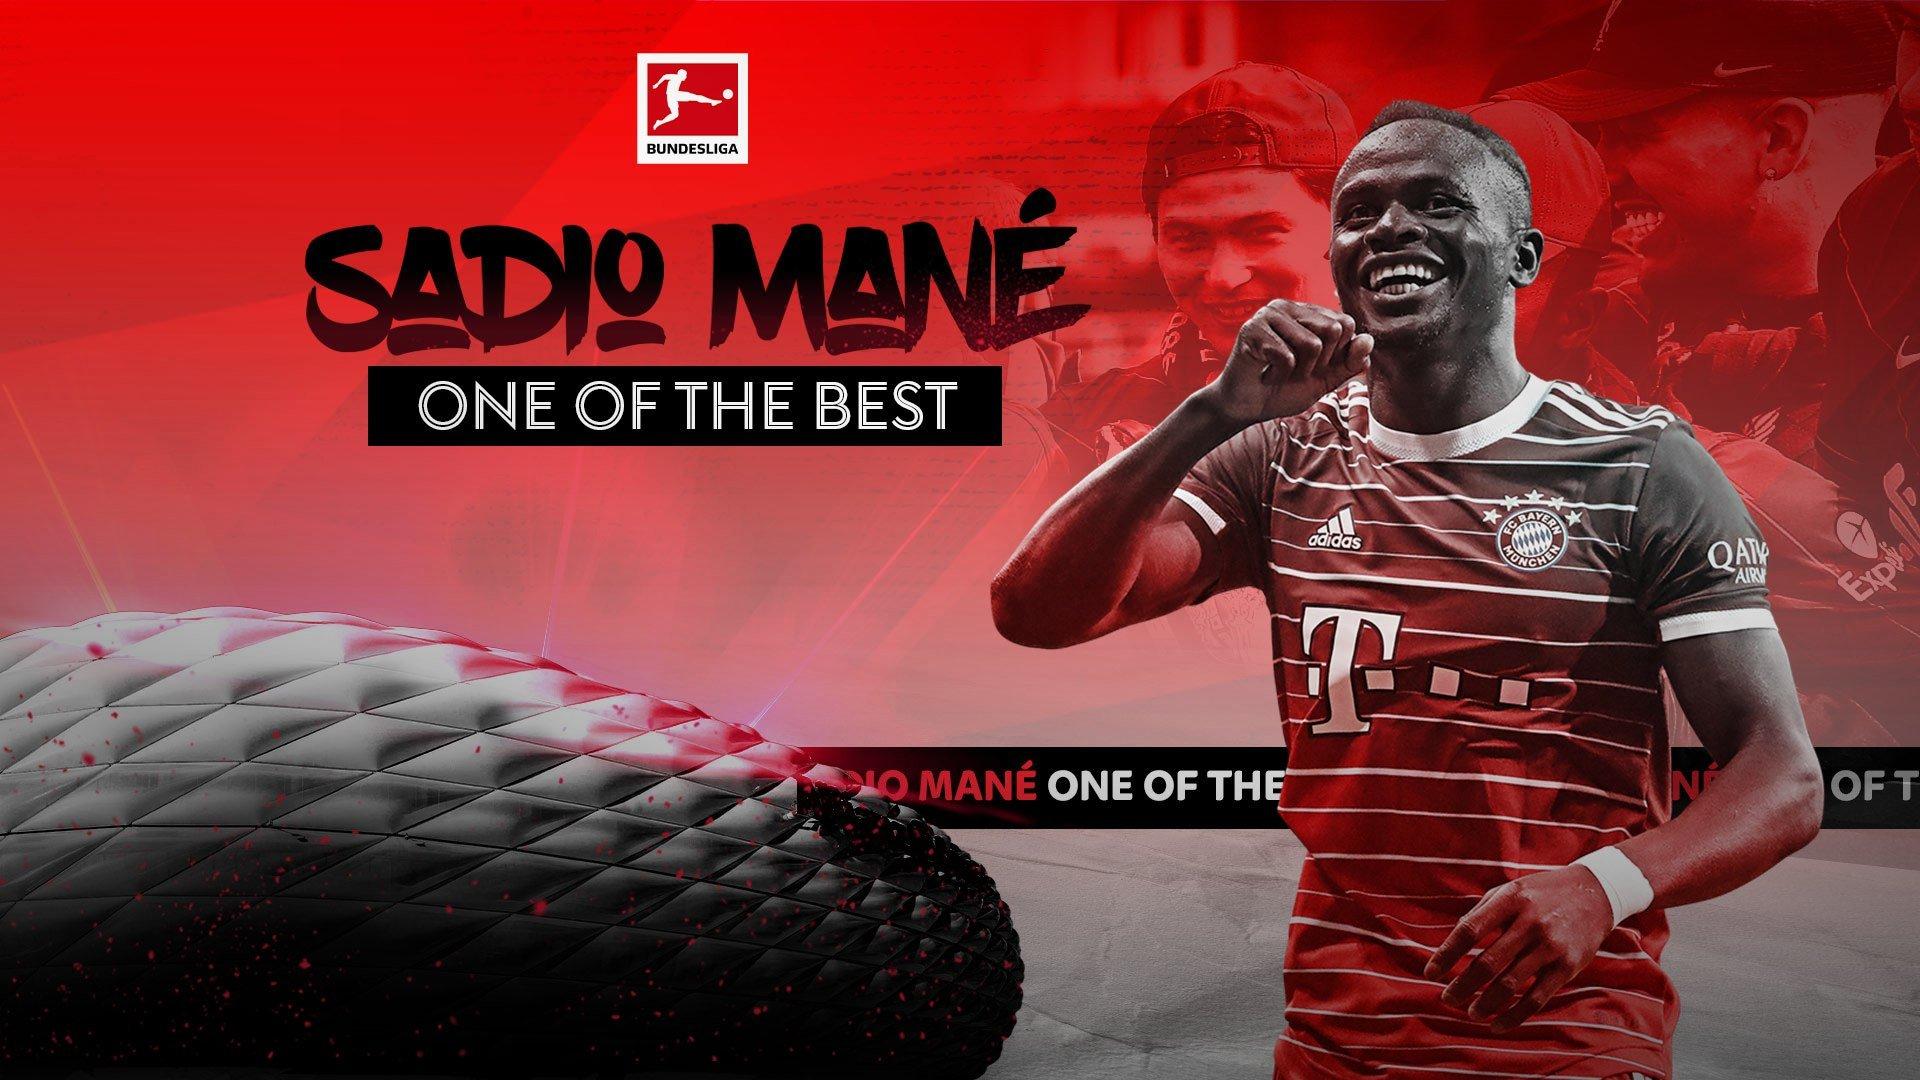 Sadio Mane': One of the best